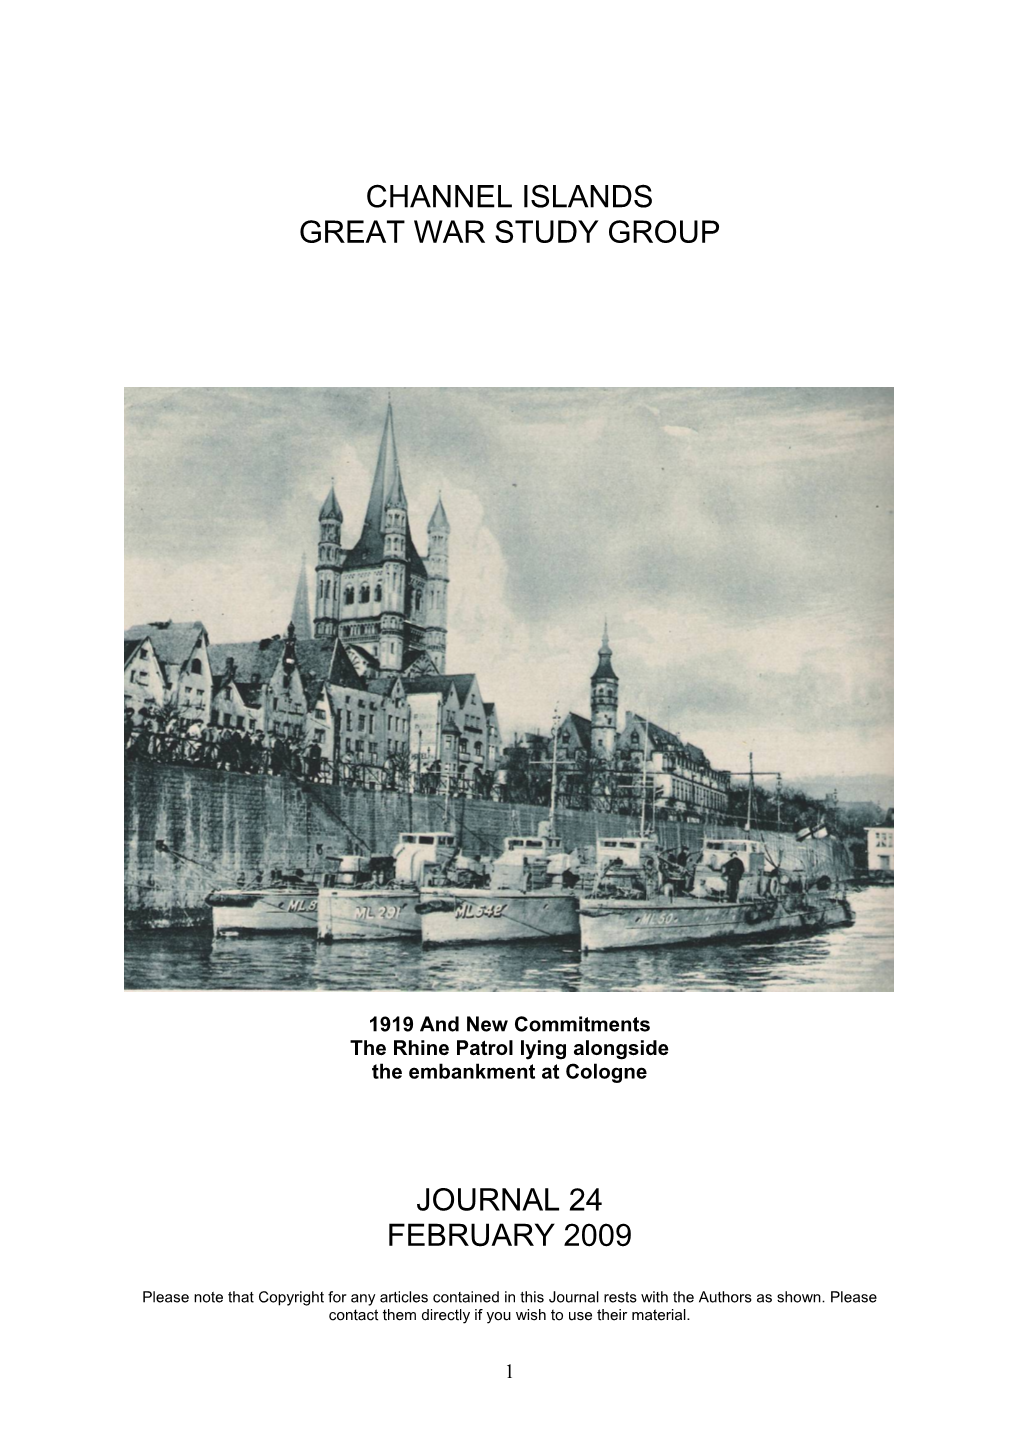 Channel Islands Great War Study Group